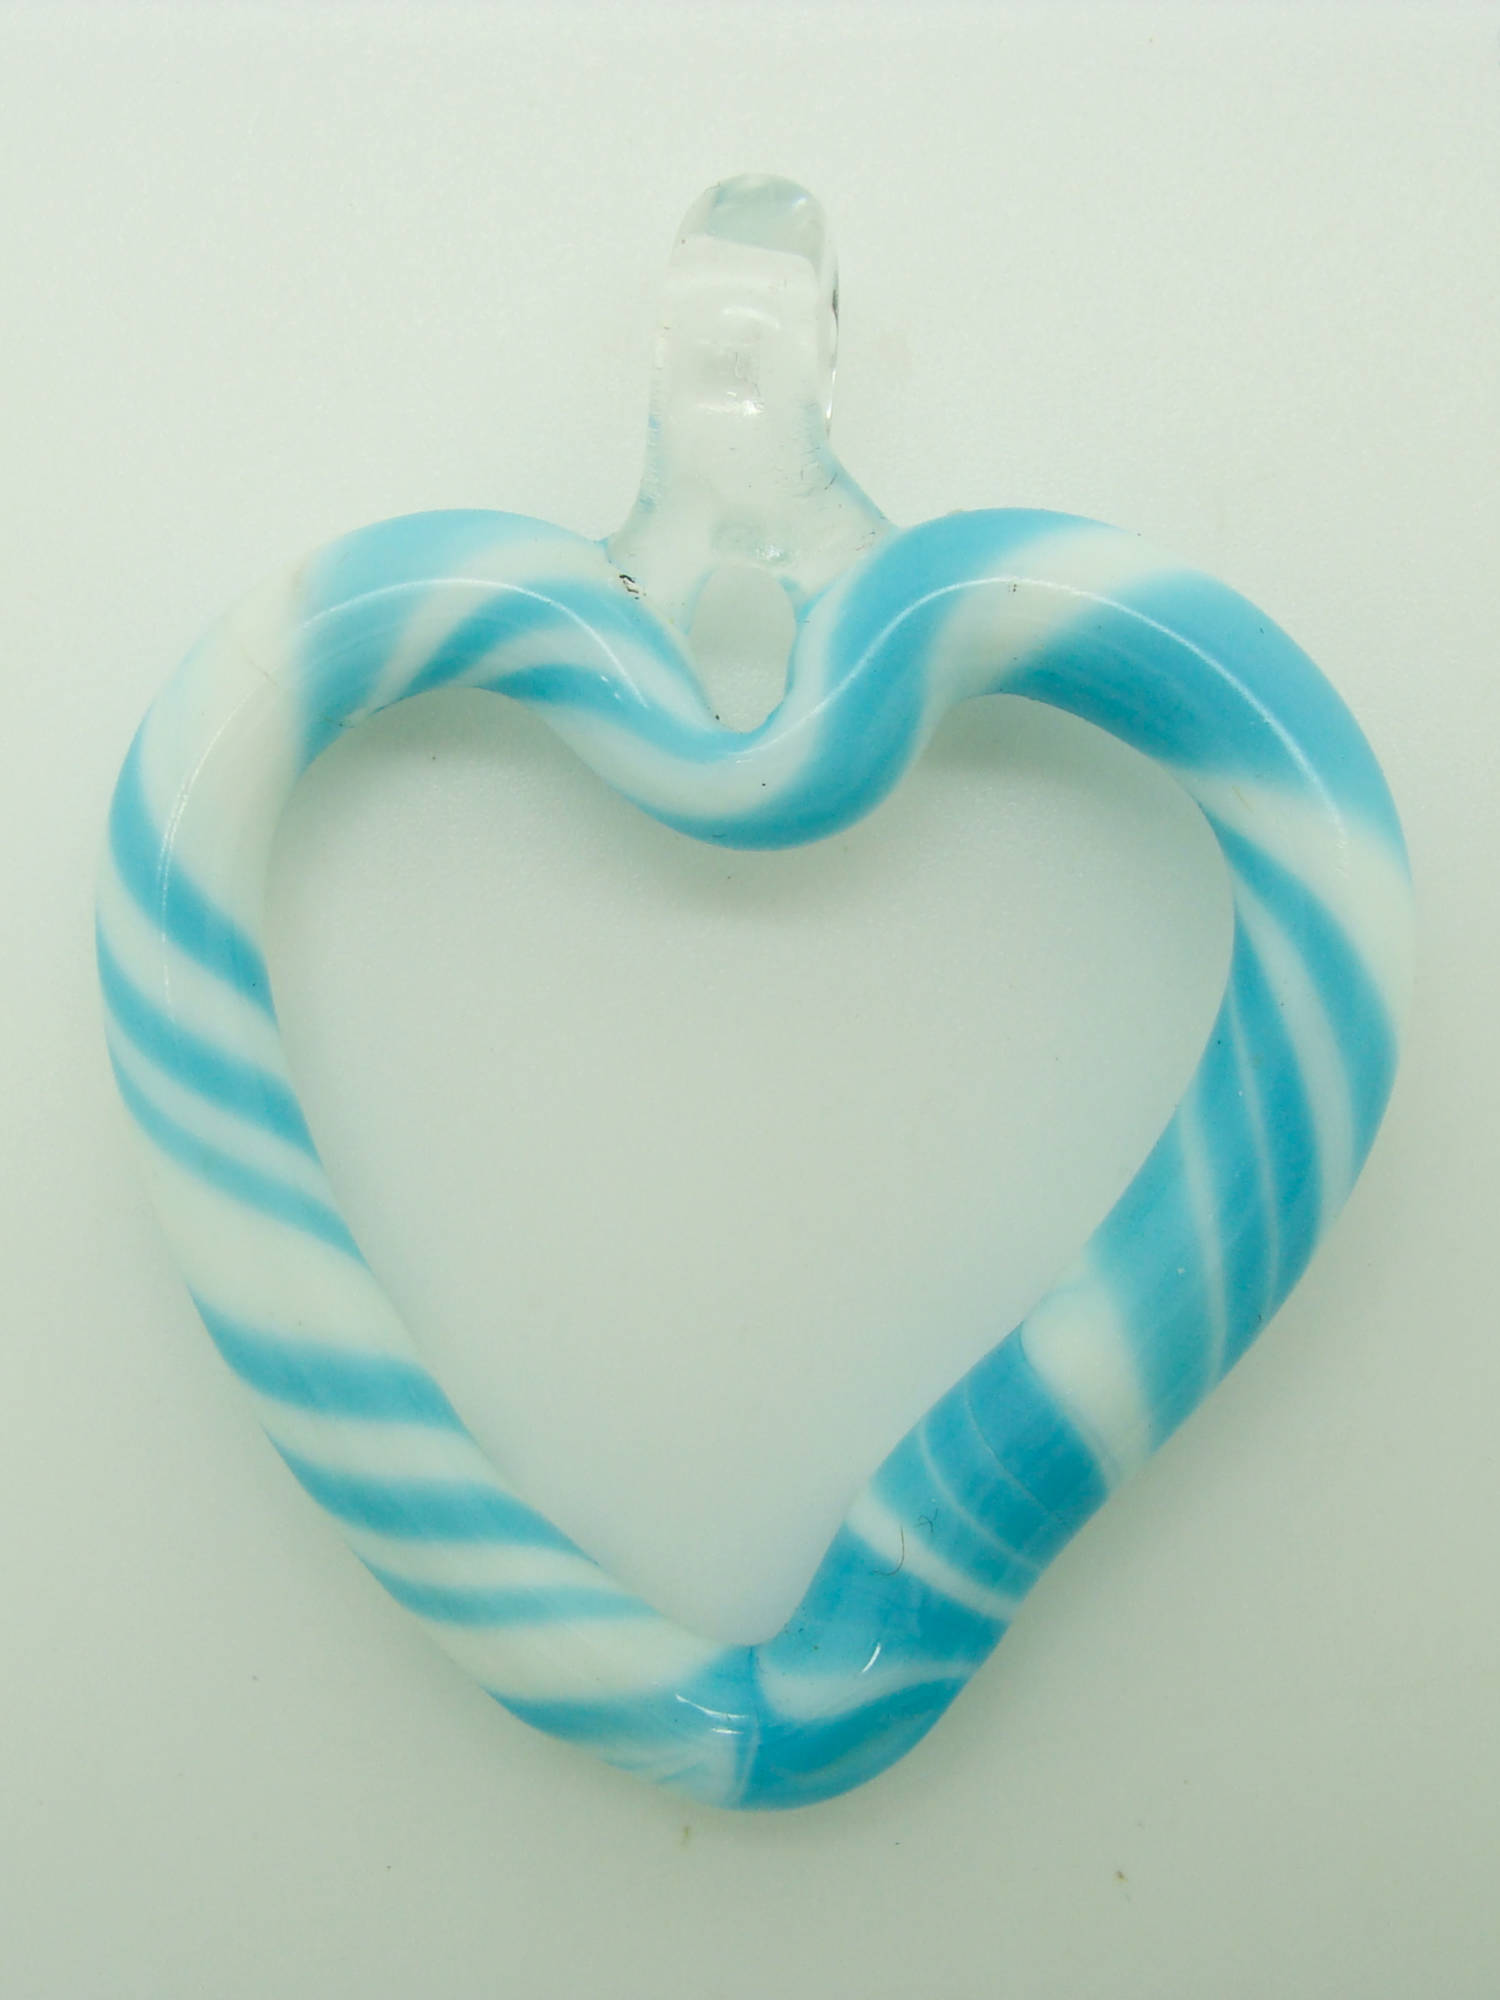 pendentif coeur creux bleu blanc 53mm Pend-174